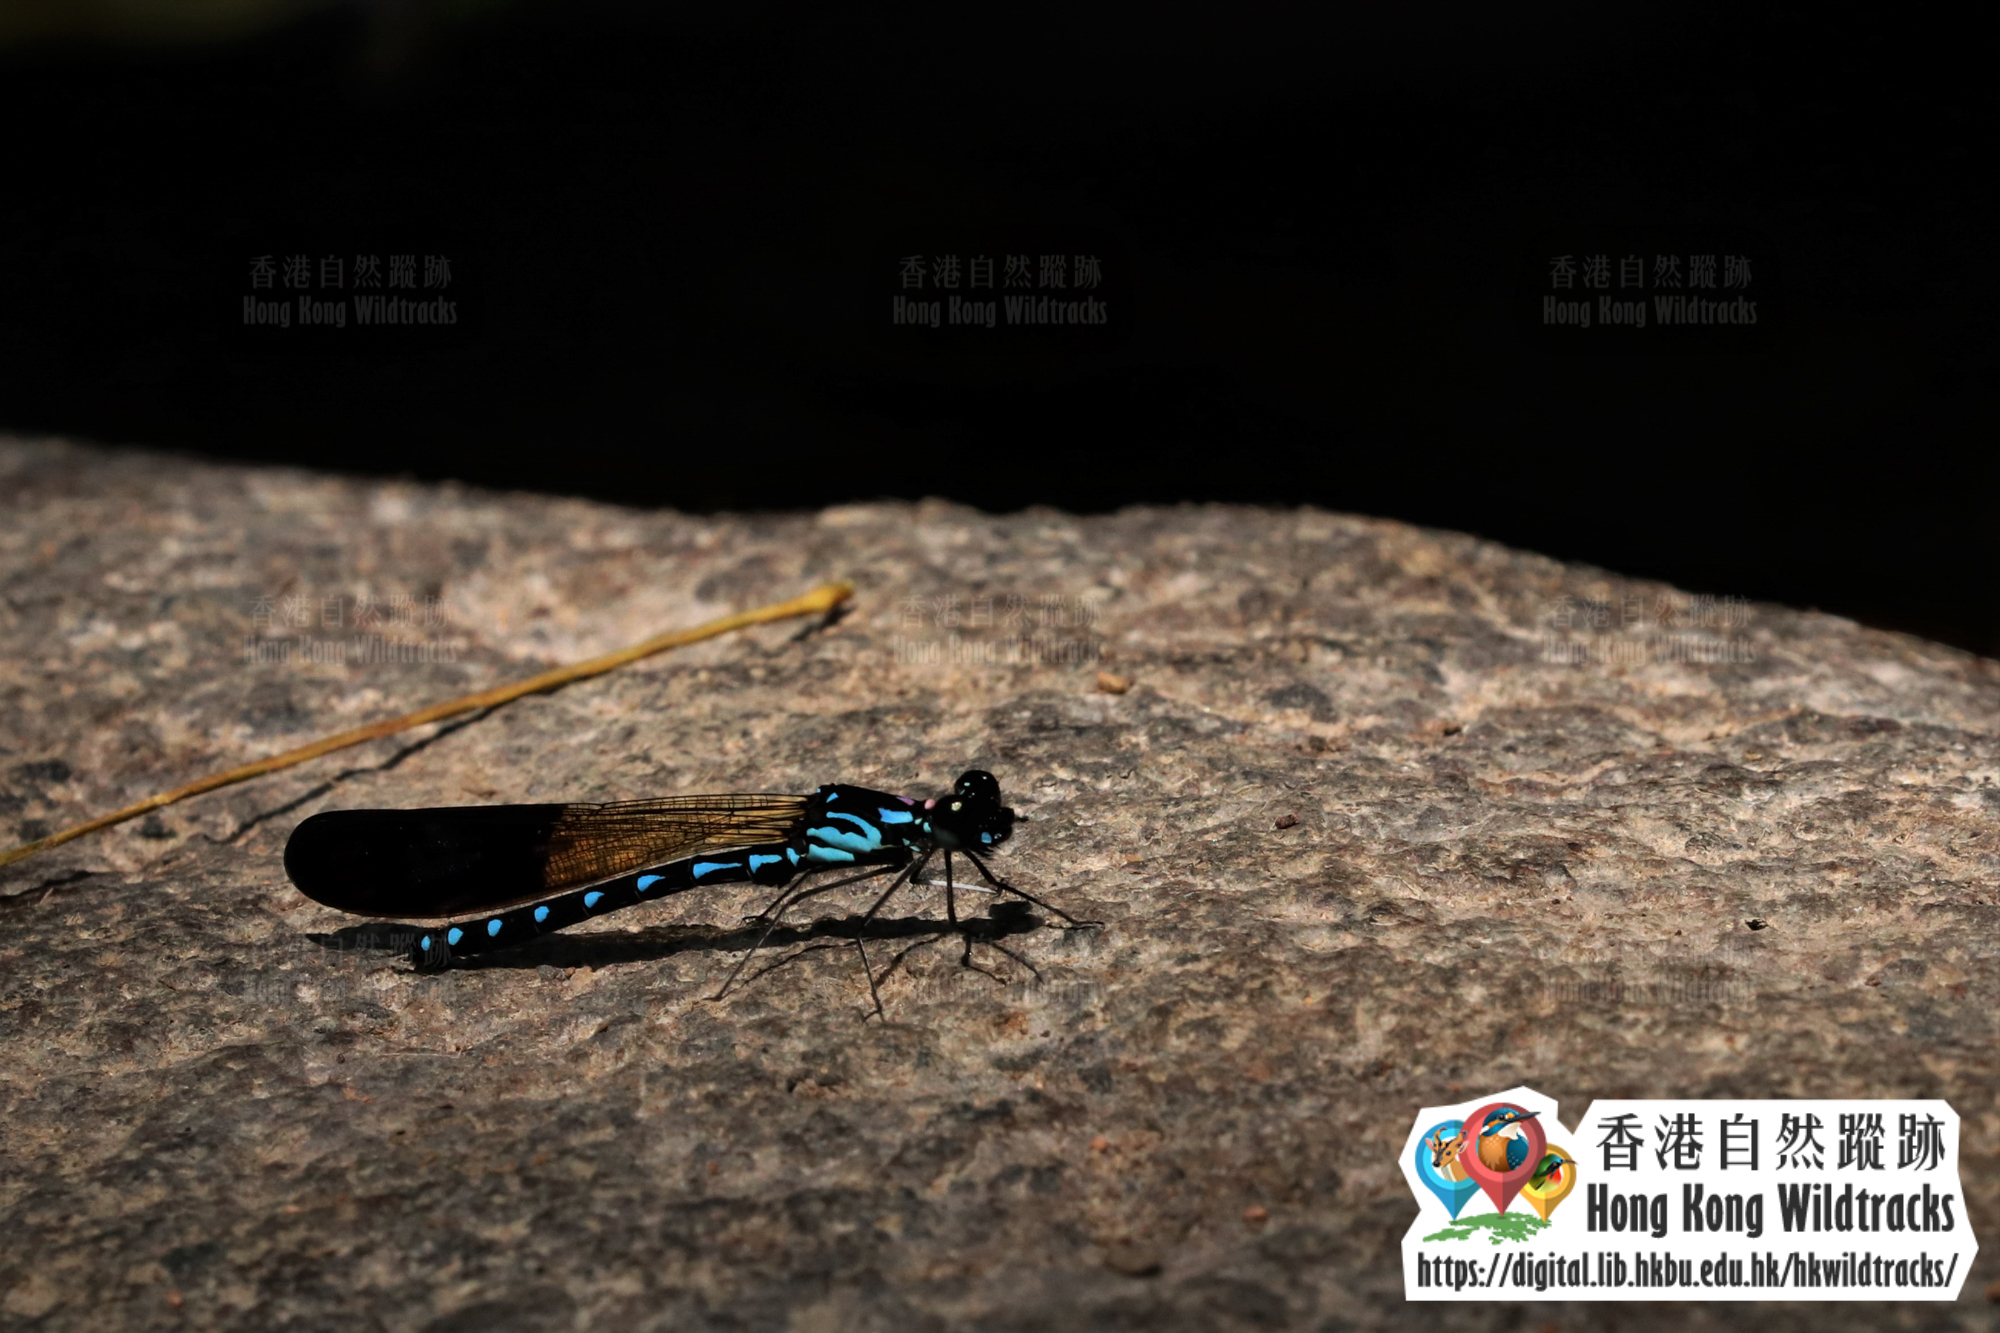 Blue Jewel(male) Photo credit:  Ivan Lam